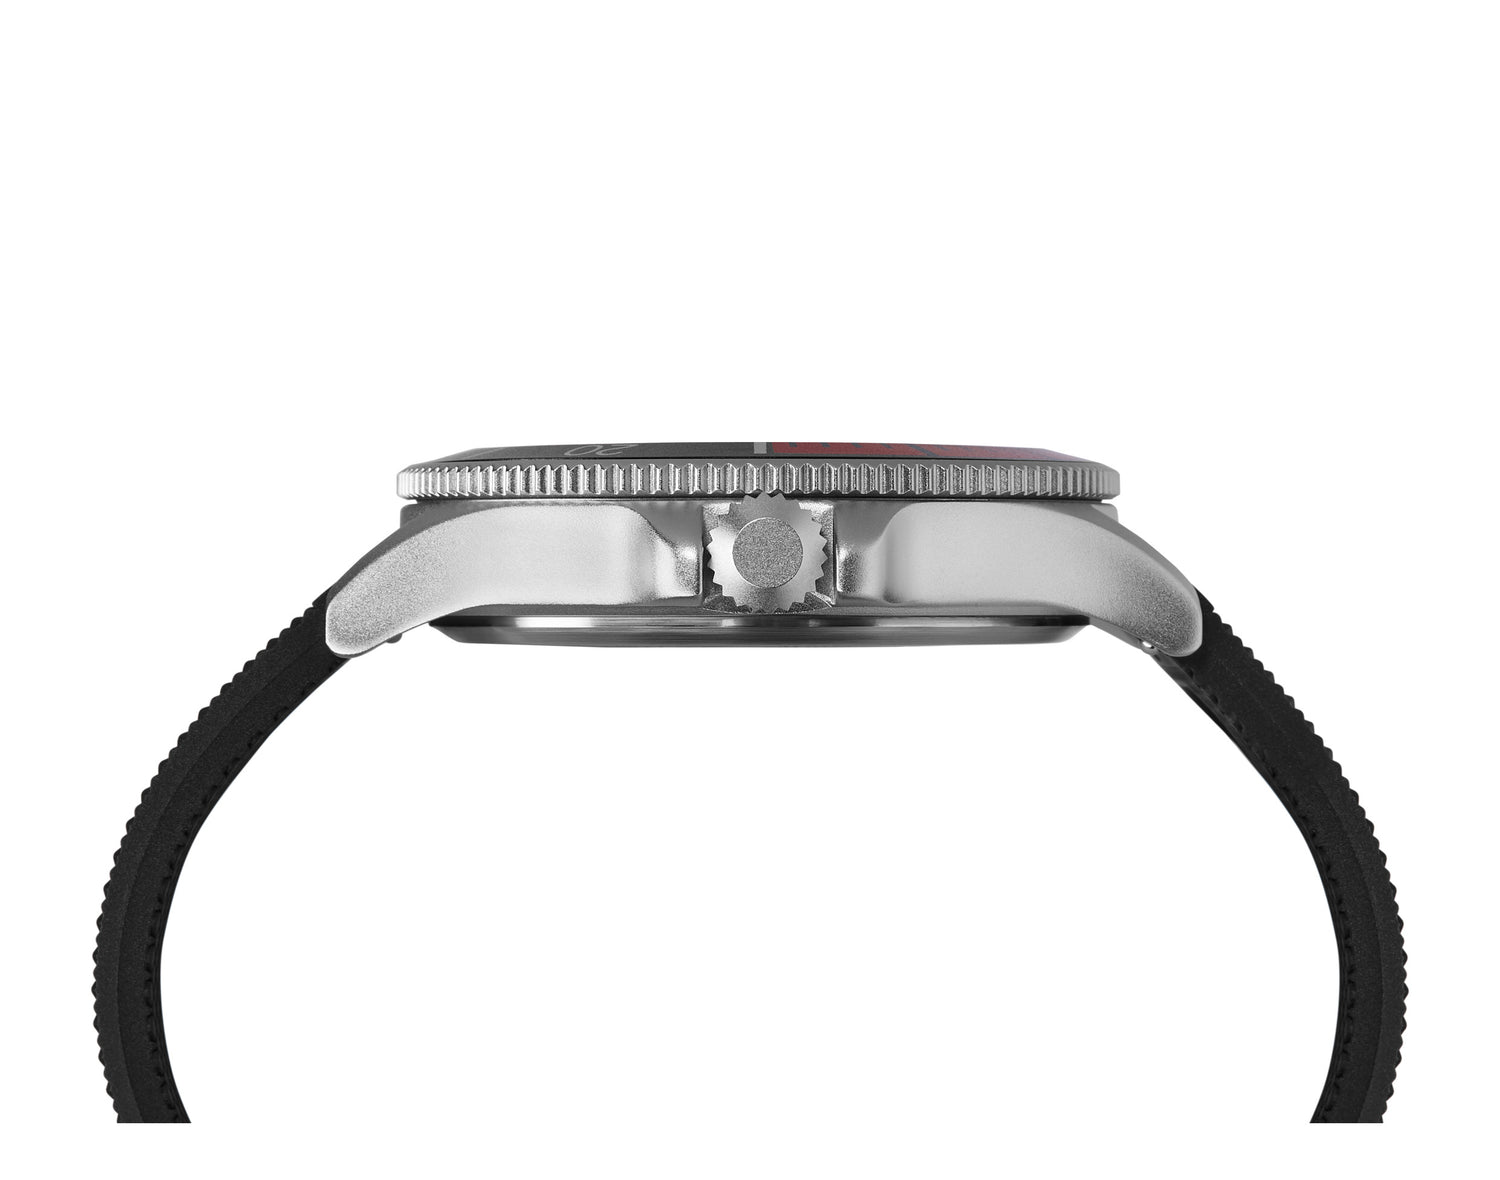 Timex Allied Coastline 43mm Silicone Strap Watch